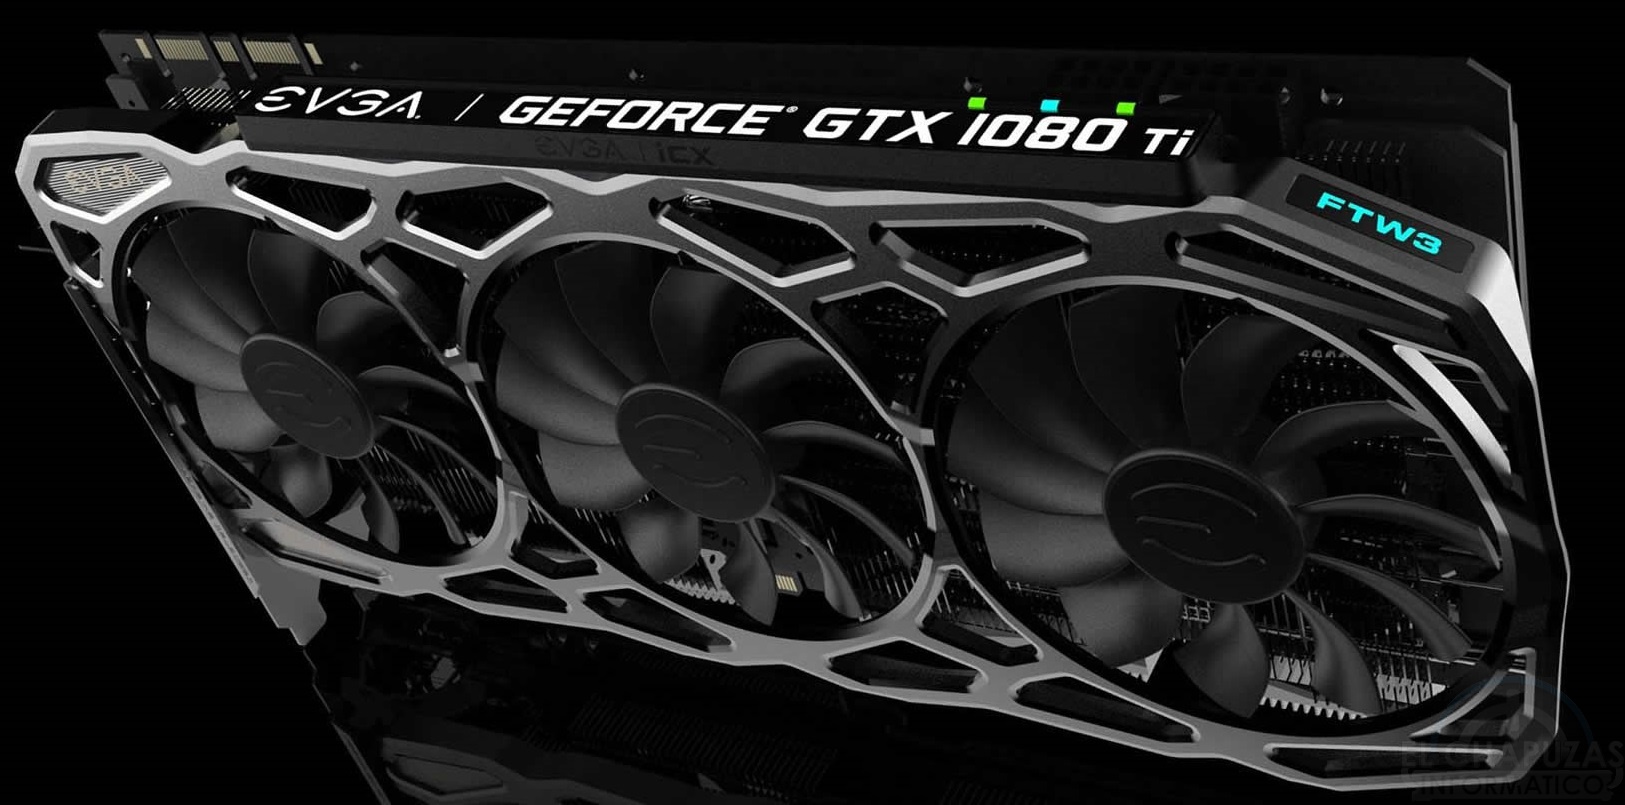 EVGA GeForce GTX 1080 Ti FTW3 image